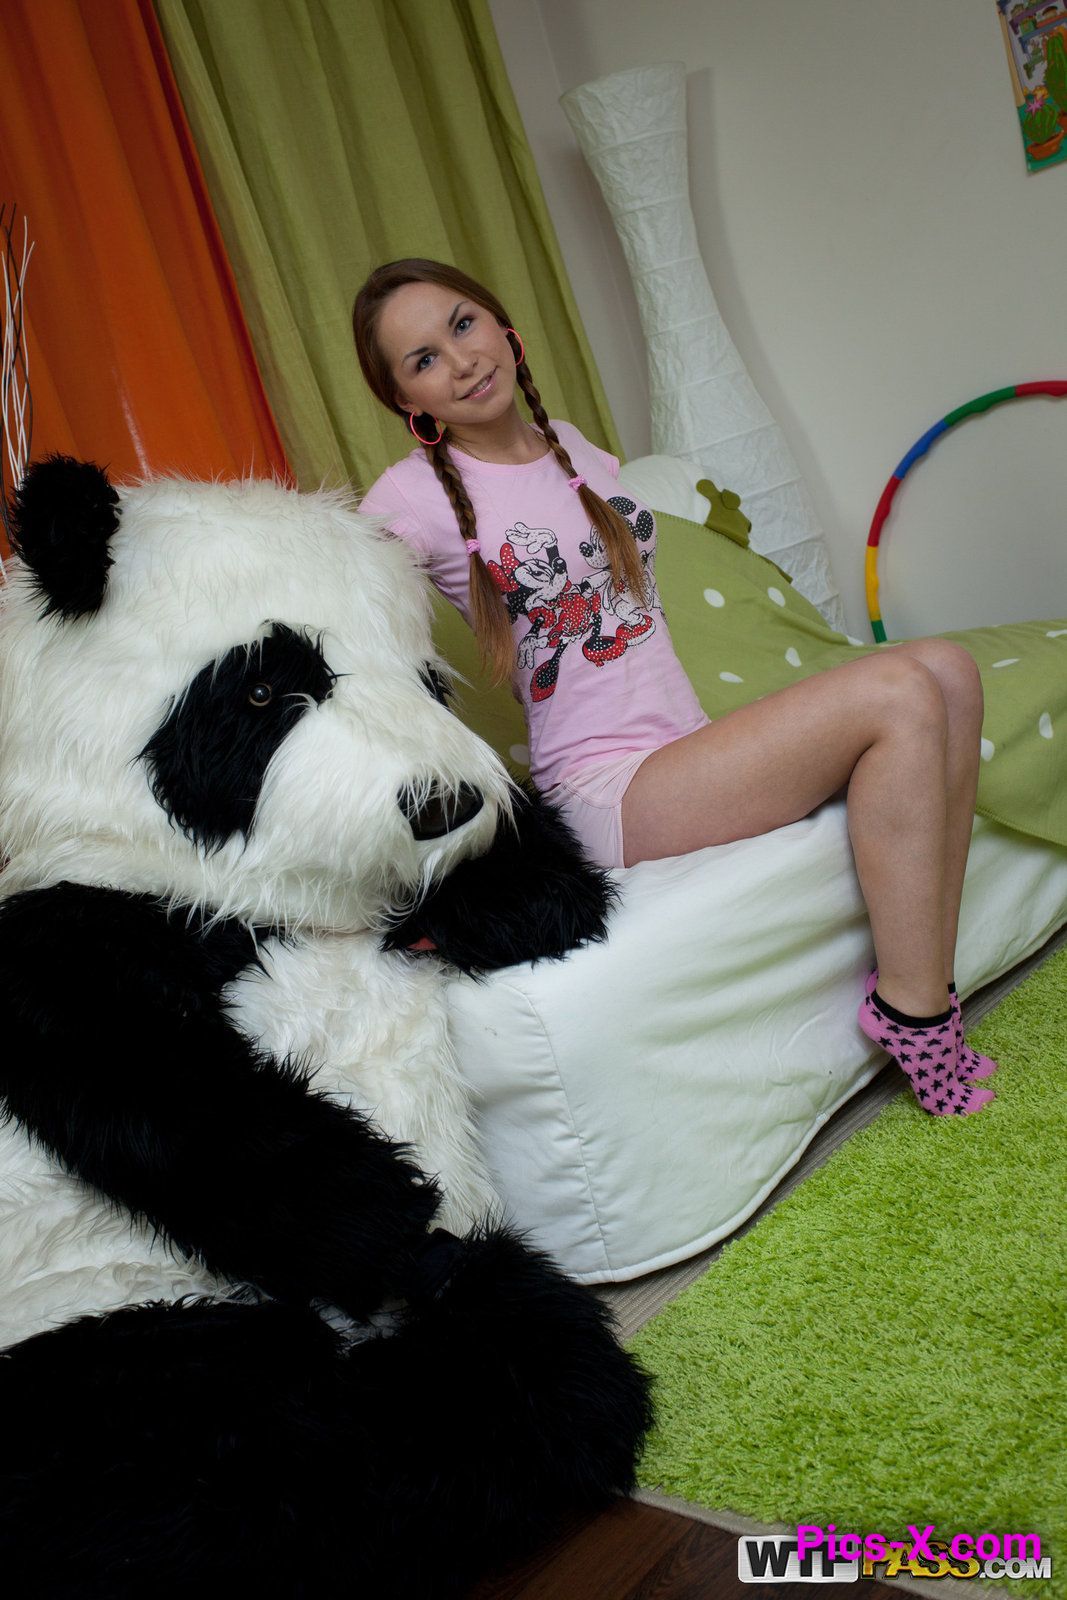 Fun sex things to do with panda - Panda Fuck - Image 1